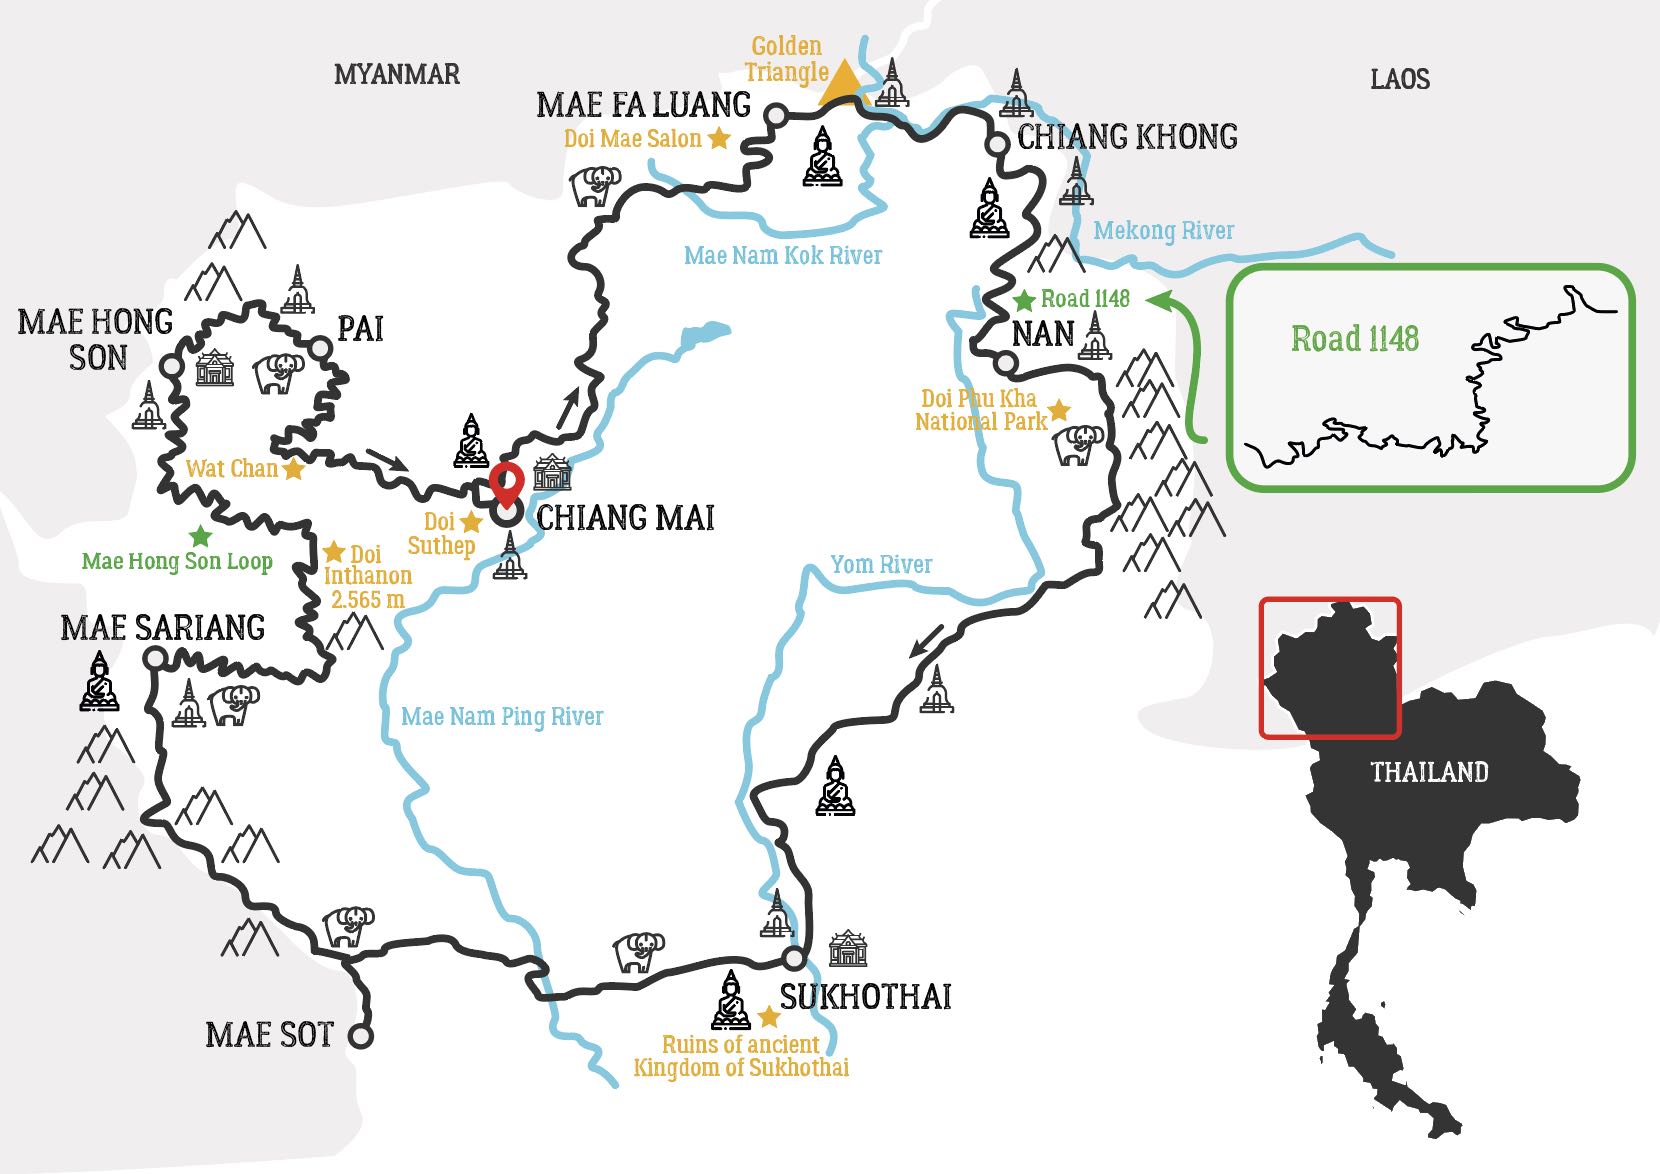 Map of Ladakh Motorcycle Tour